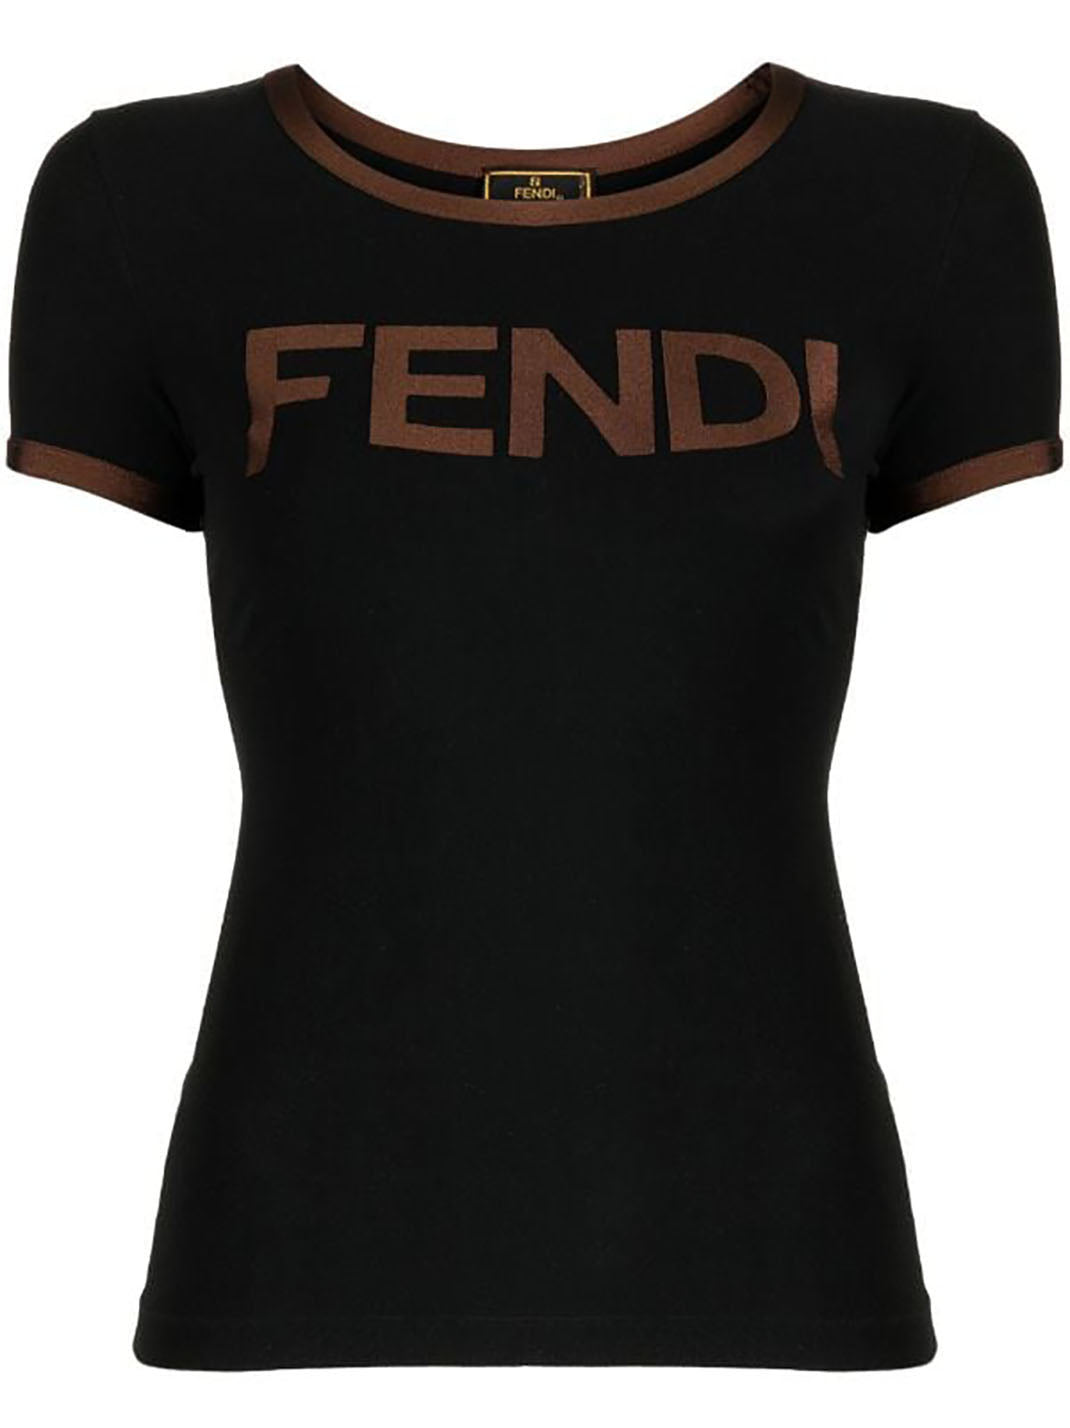 FENDI 1990-2000s logo mesh top